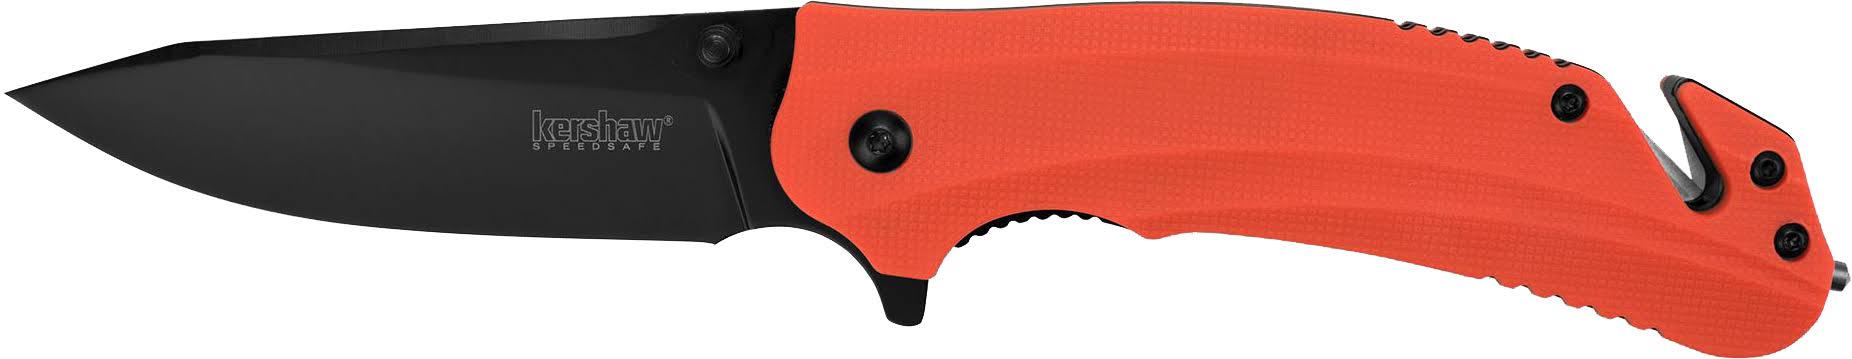 Kershaw Barricade Survival Assisted Folding Knife - Orange and Black